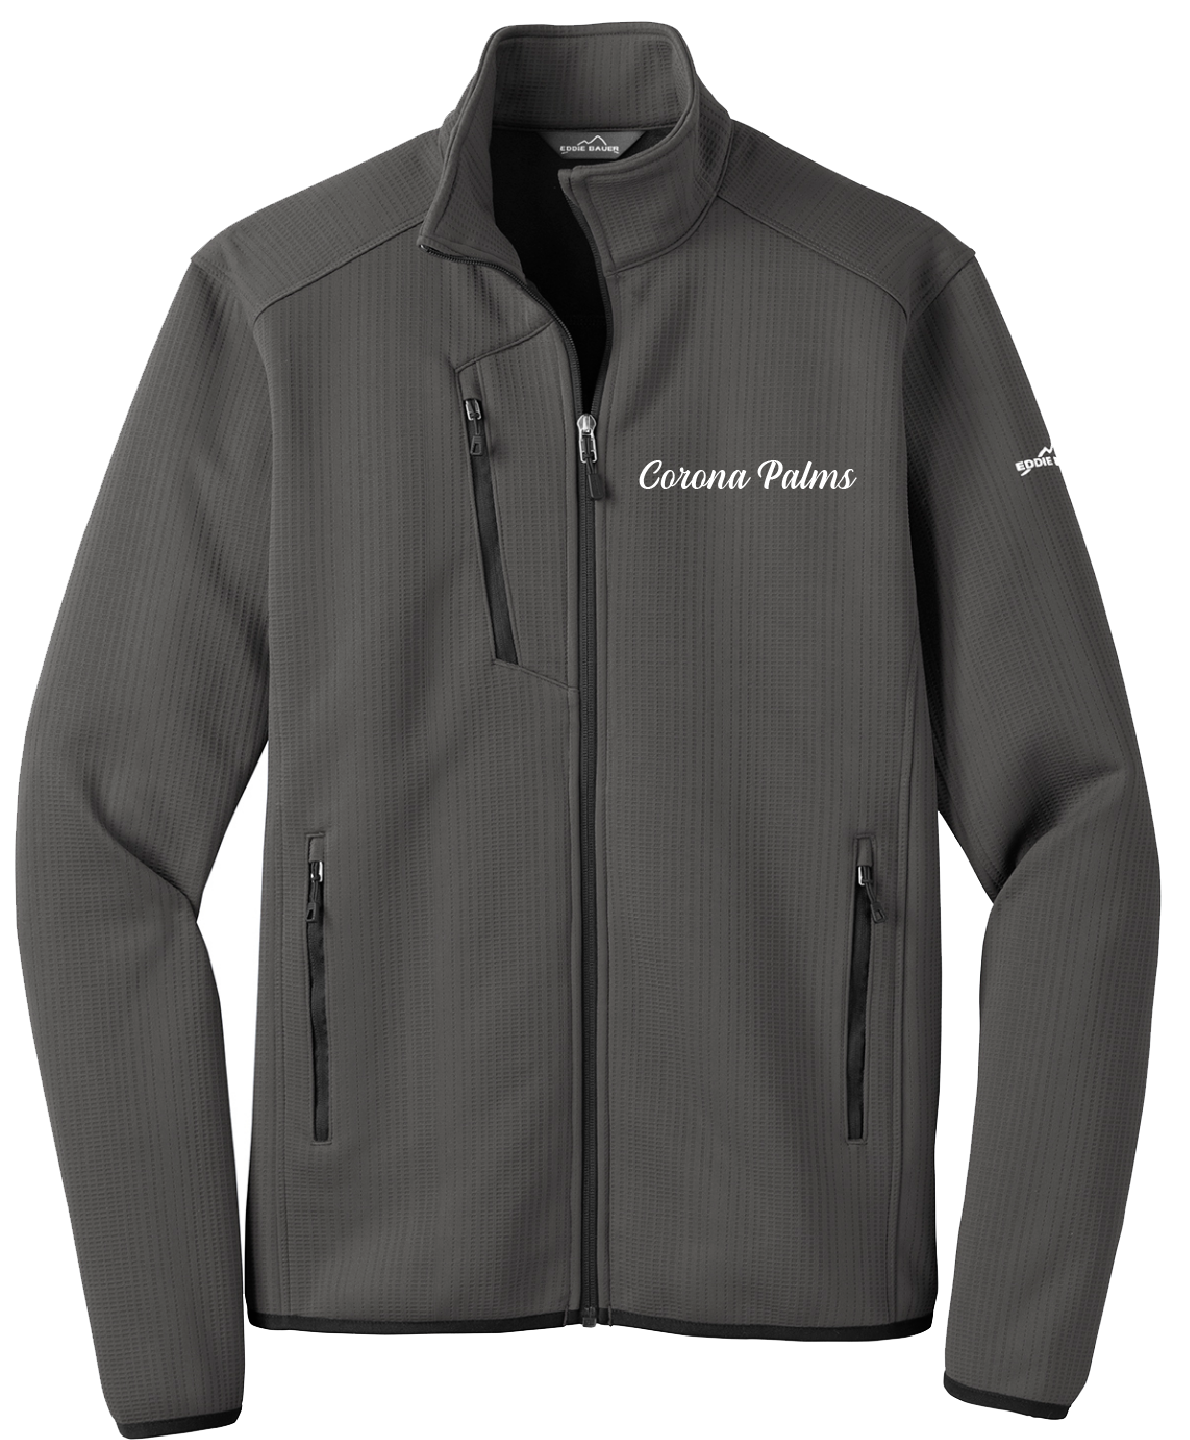 Corona Palms - Mens - Eddie Bauer ® Dash Full-Zip Fleece Jacket